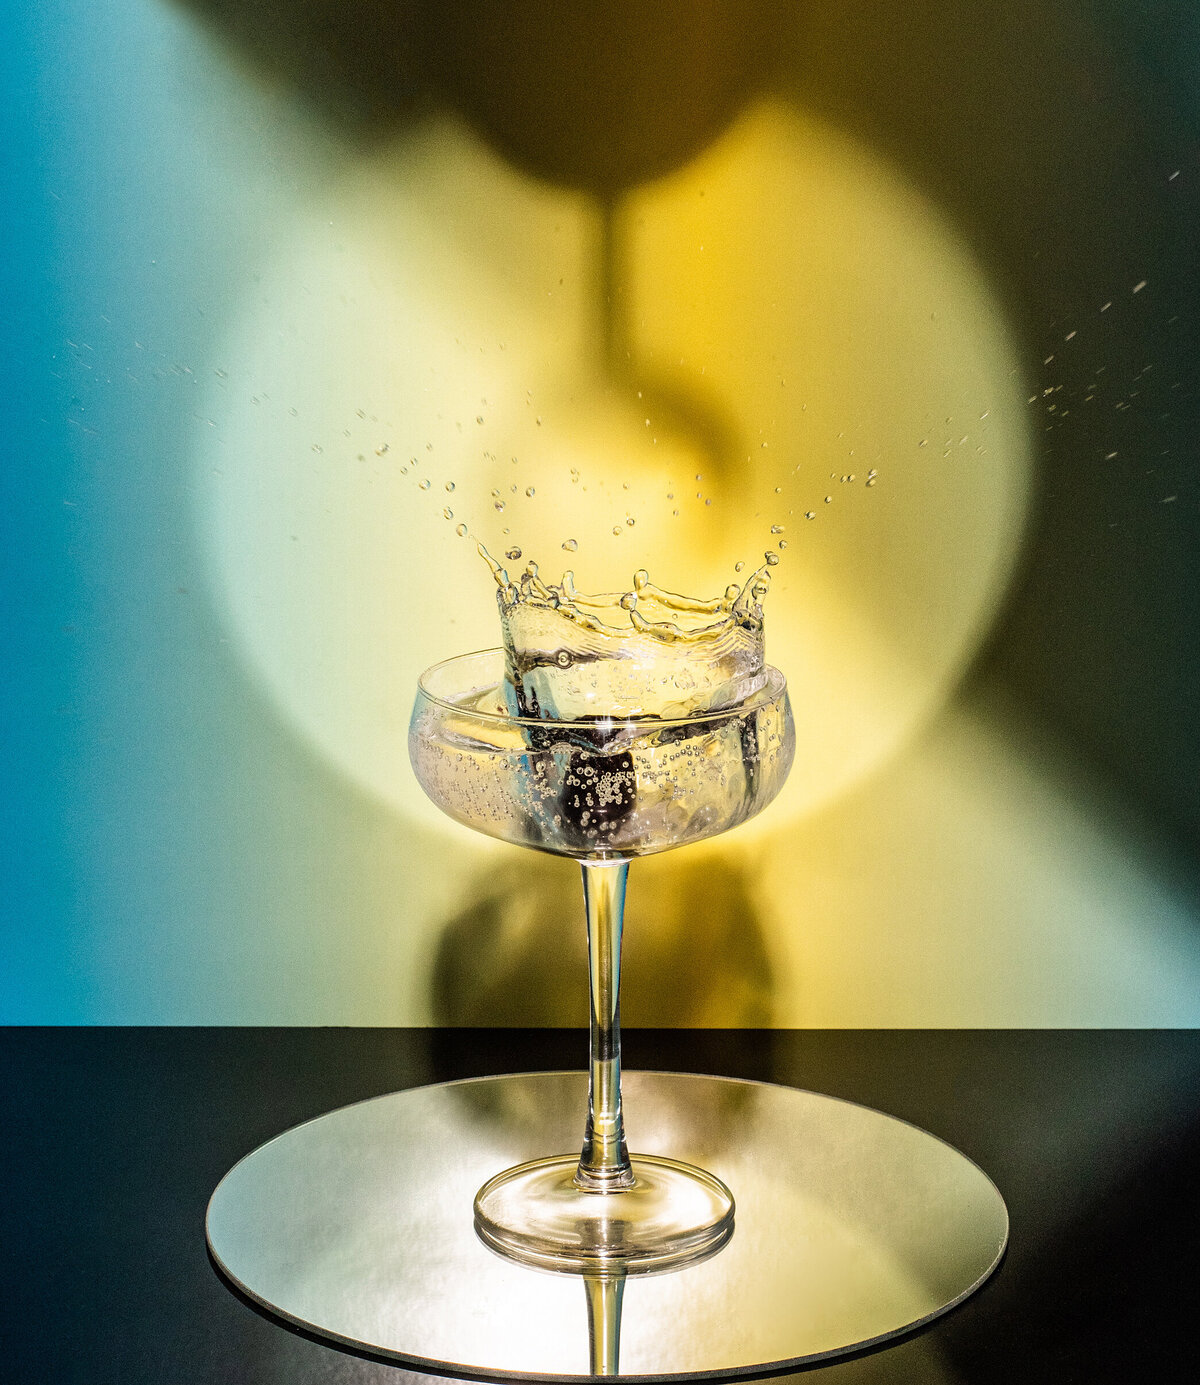 a splash into a cocktail glass